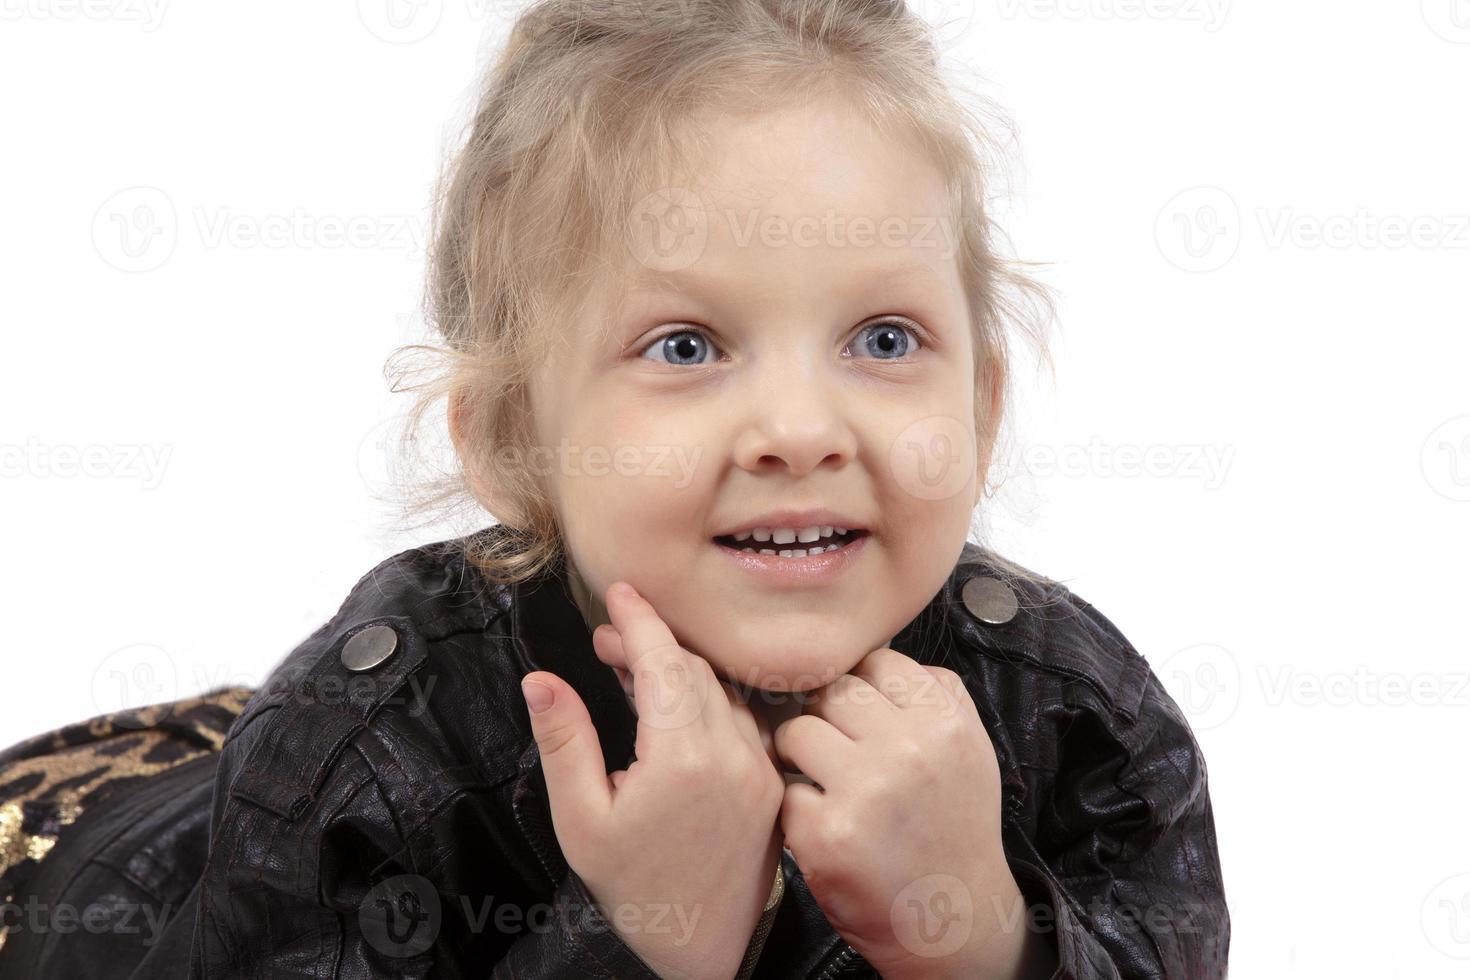 hermosa pequeño niña en un blanco antecedentes. niño rubia con azul ojos. cinco año antiguo de ojos azules muchacha. foto